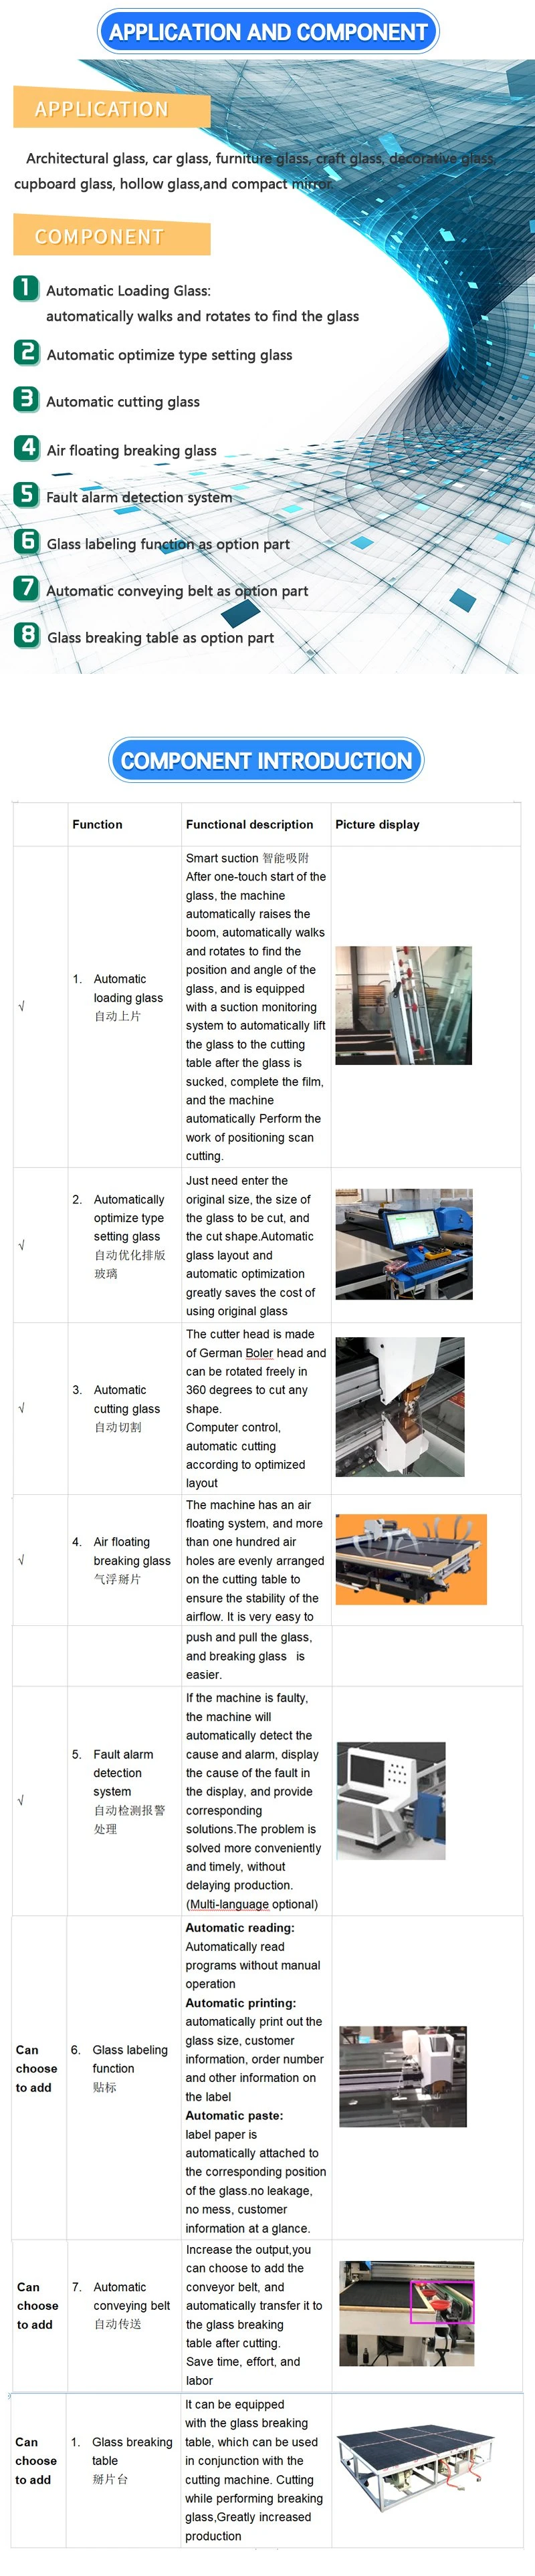 Low Price Zxq Glass Cutting Machine Glass Cutting Production Line